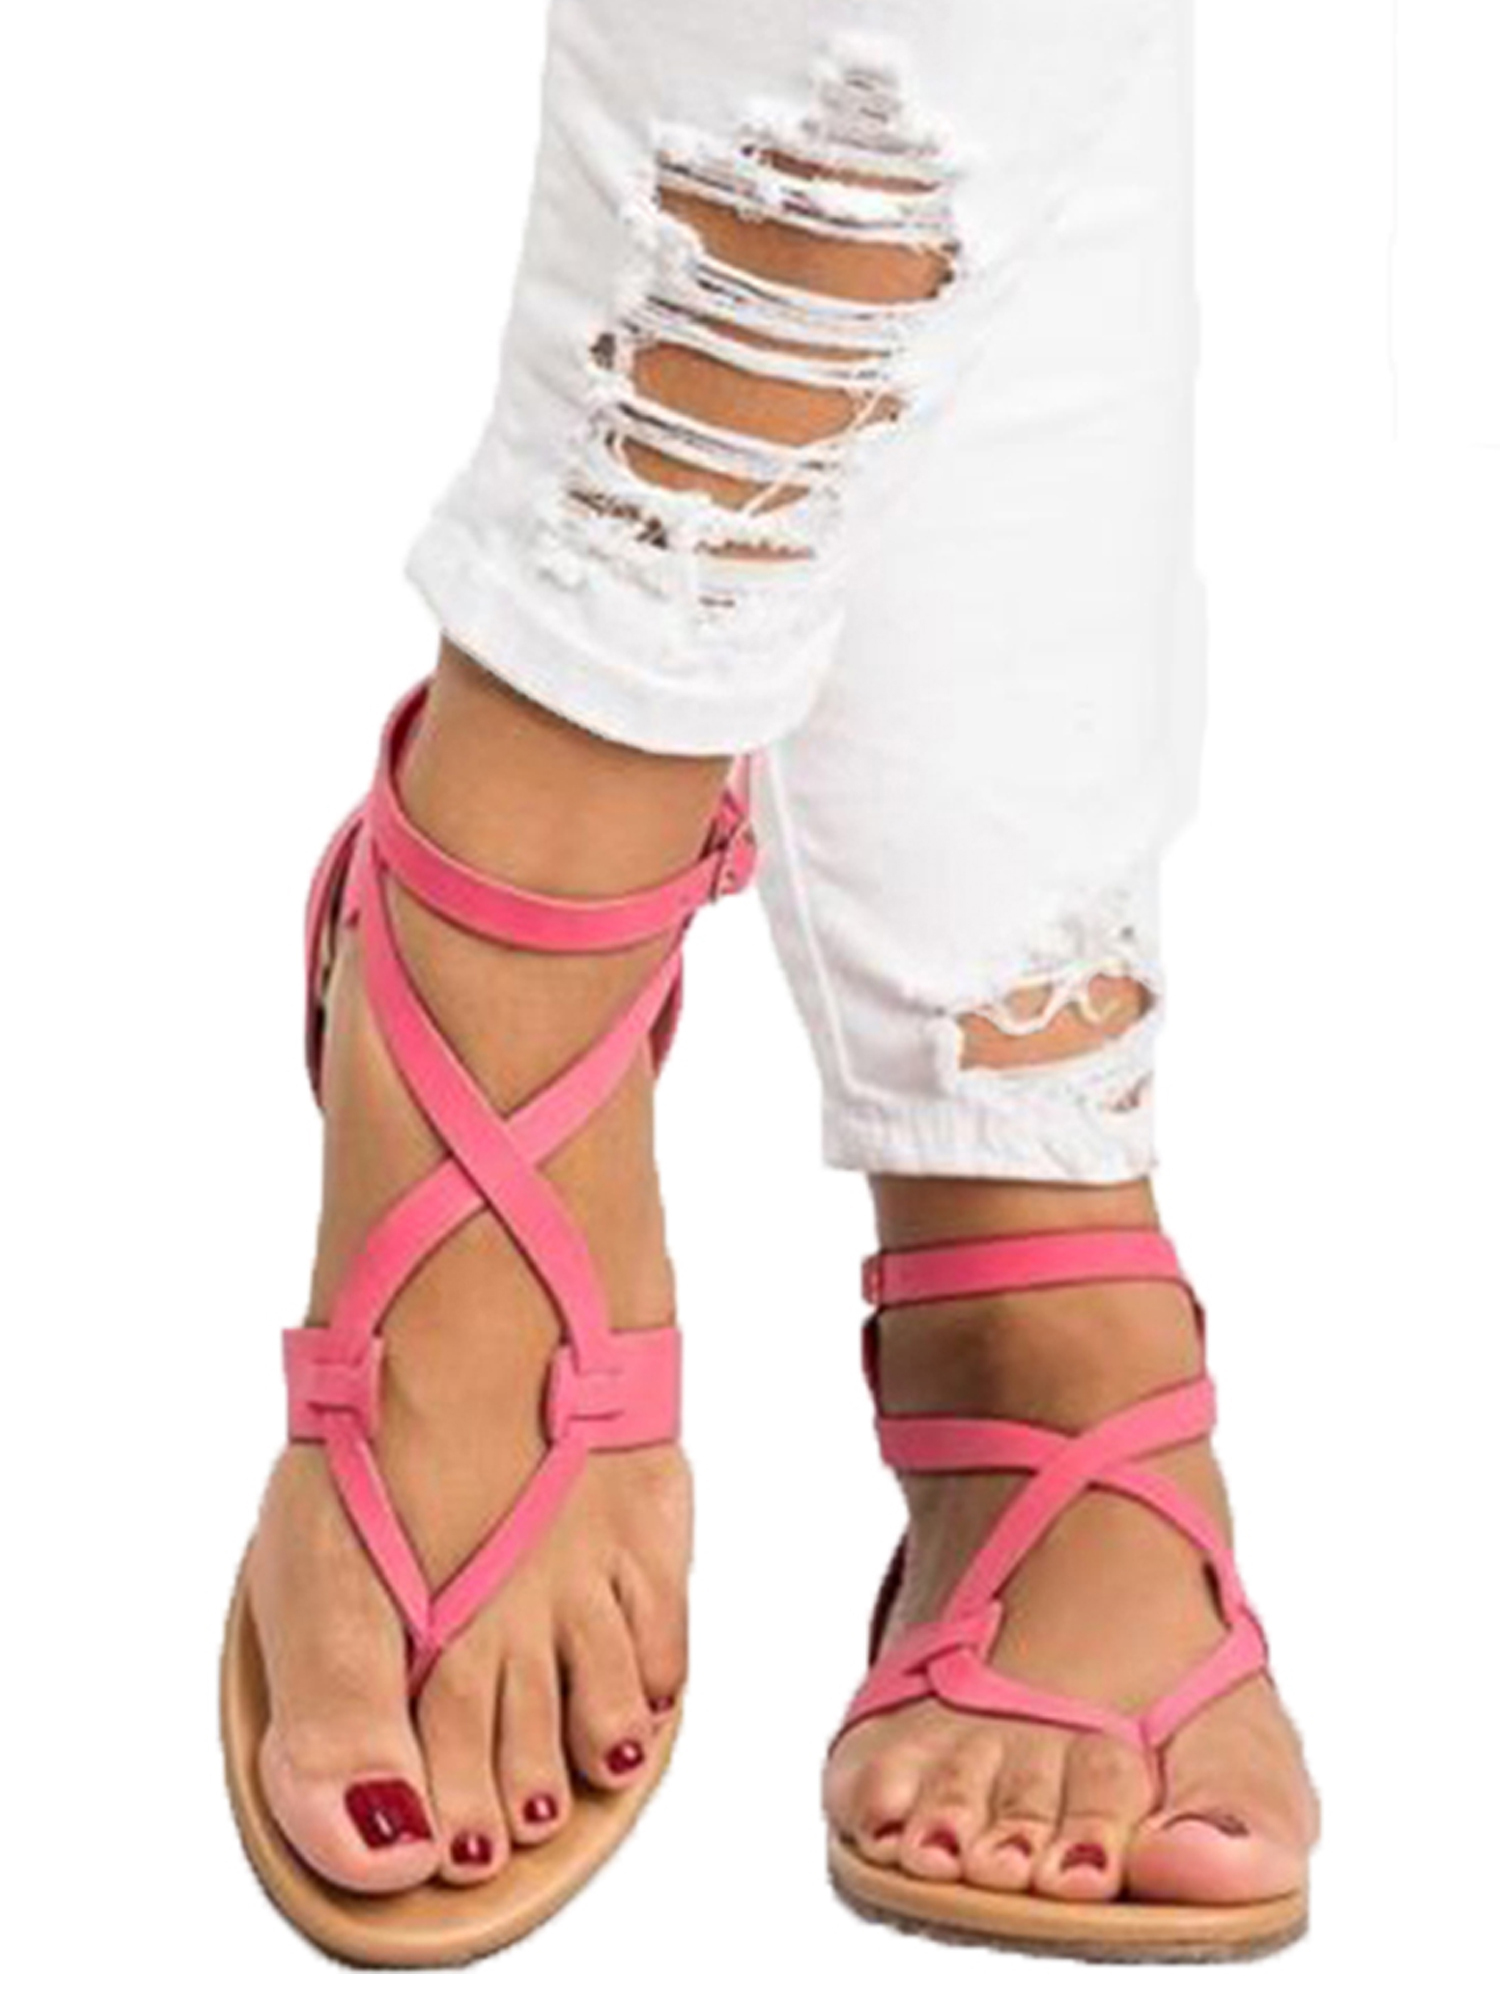 Womens Summer Boho Flip Flops Sandal Cross T Strap Thong Flat Casual Shoes Size - image 1 of 3